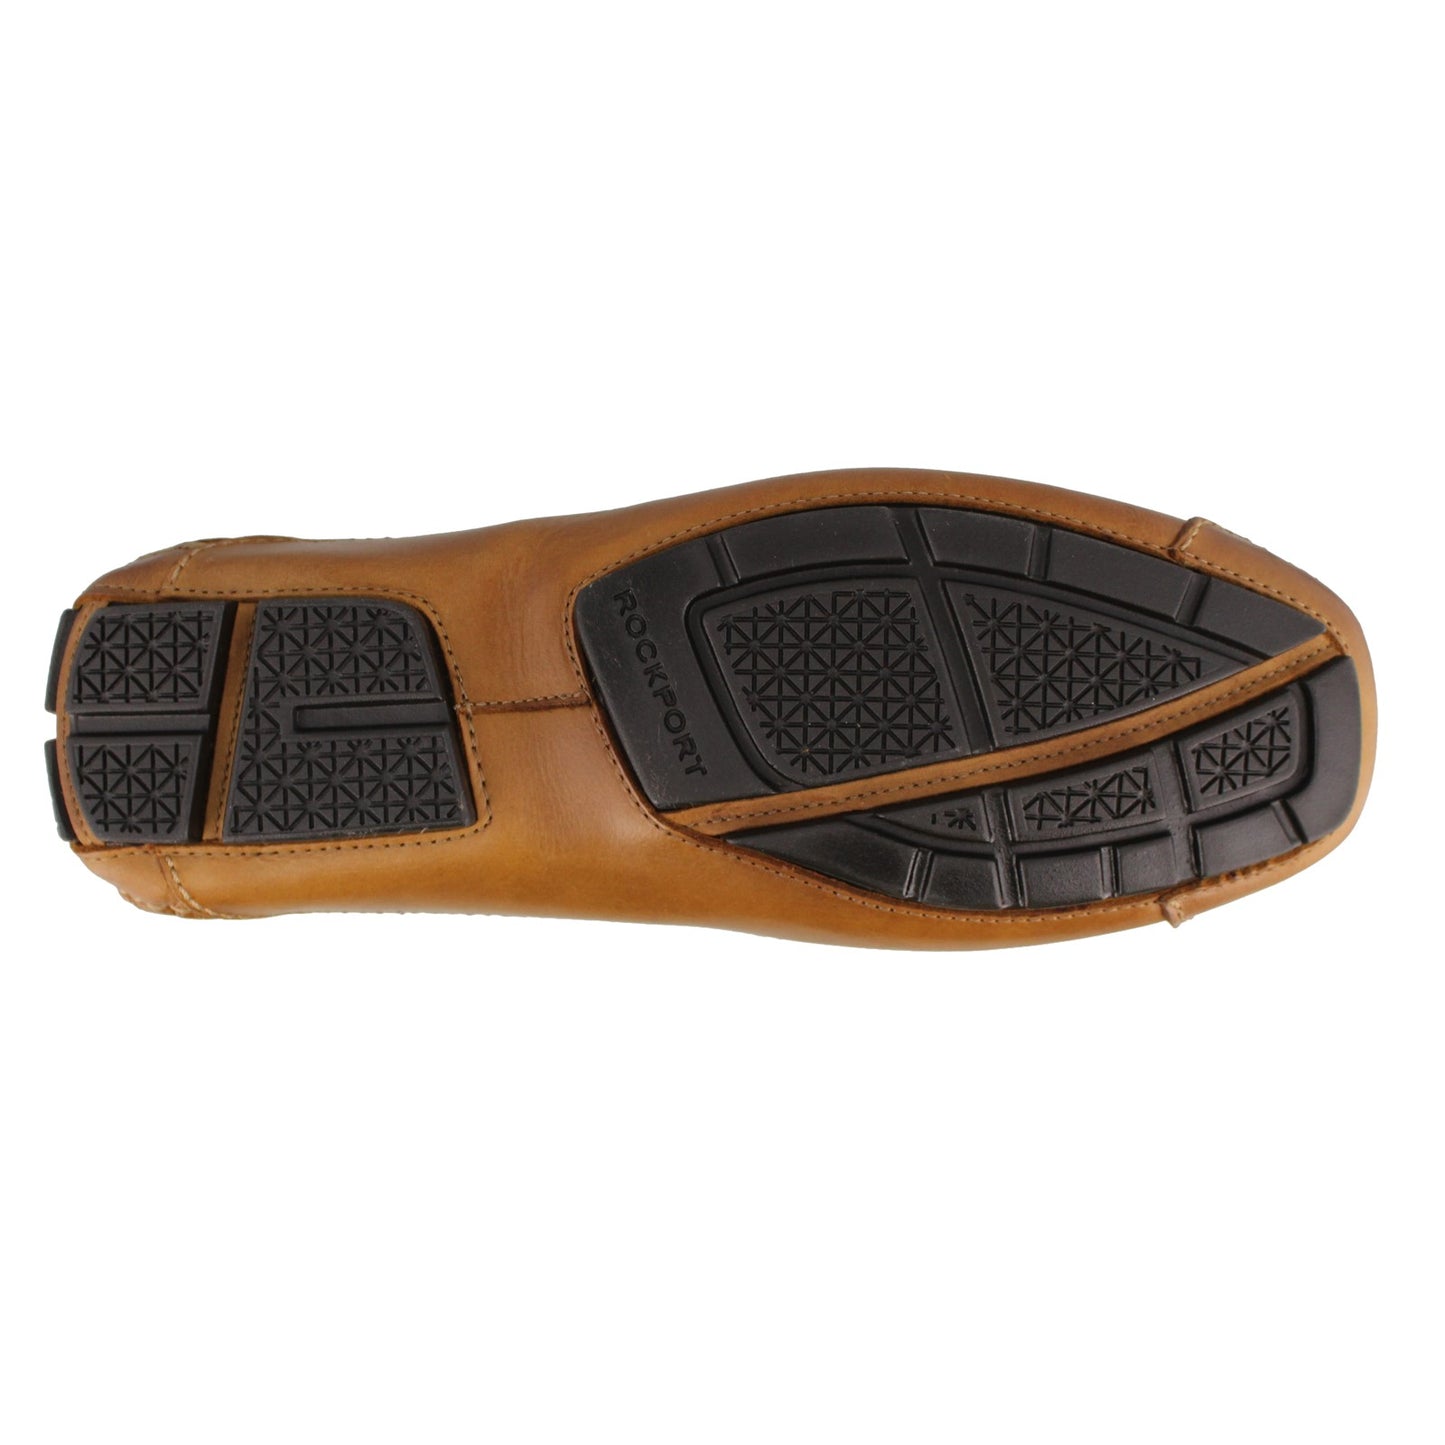 Men's Rockport, Luxury Cruise Venetian Slip On Loafers | [Rockport] Men's Shoes Men's Shoes Men's Loafers M76498 TAN / Comfortable Shoes Light Shoes Compo-Brandy